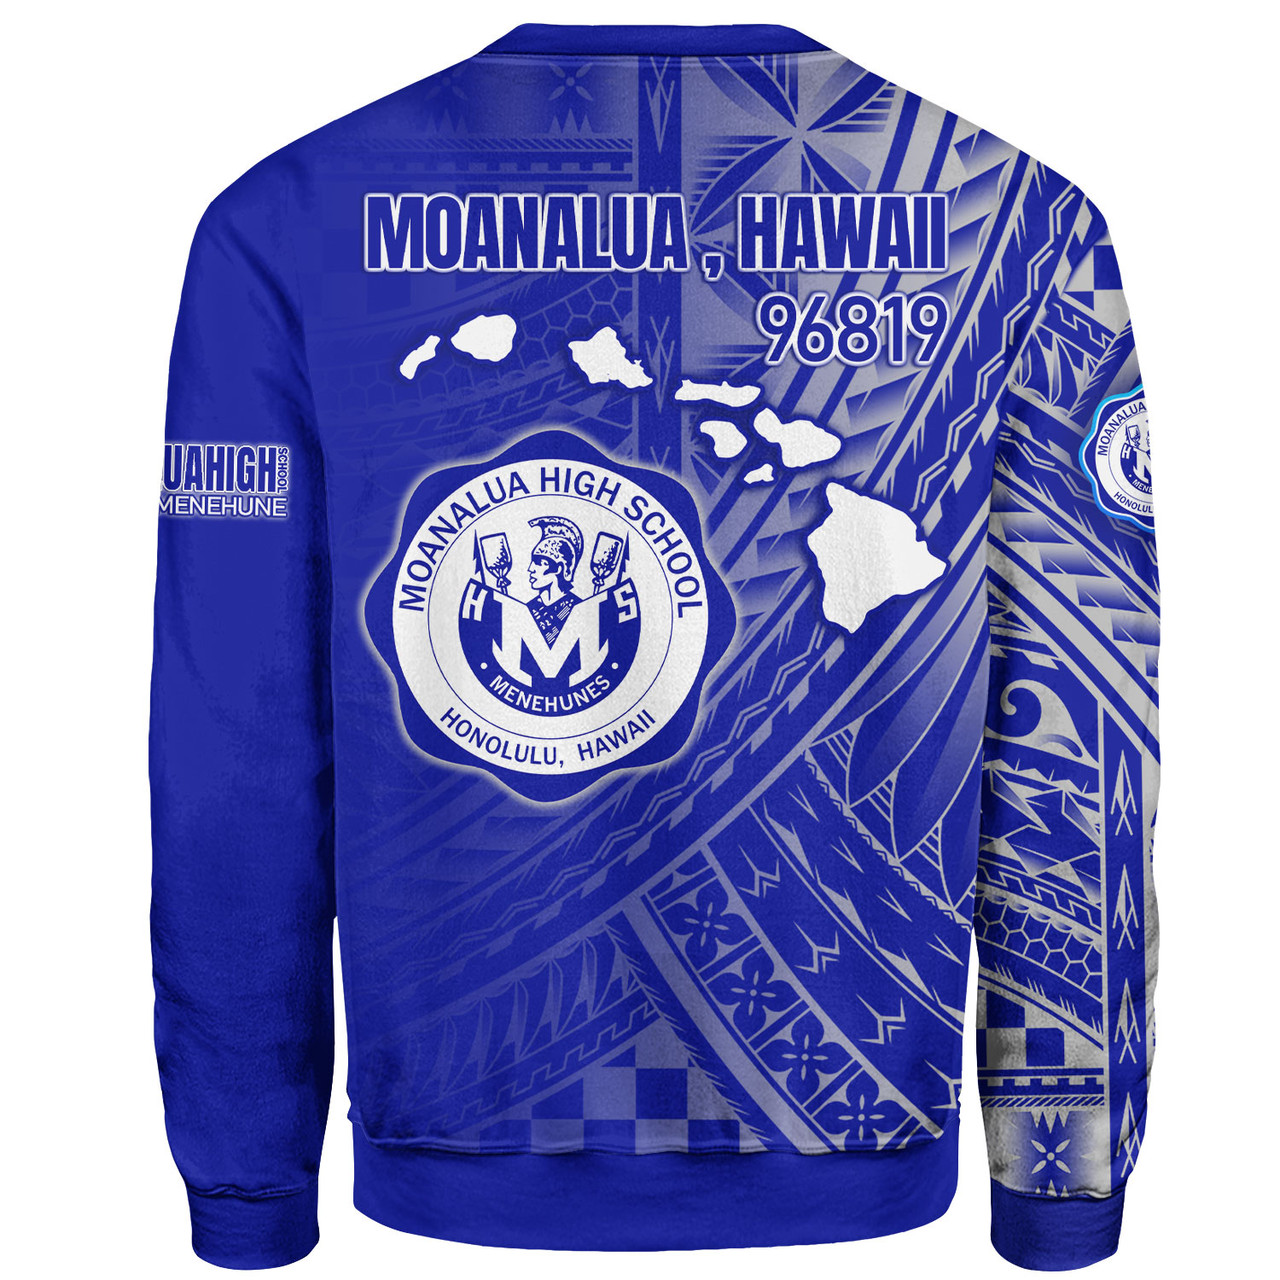 Hawaii Moanalua High School Sweatshirt - Moanalua NÄ Menehune Hawaii Patterns